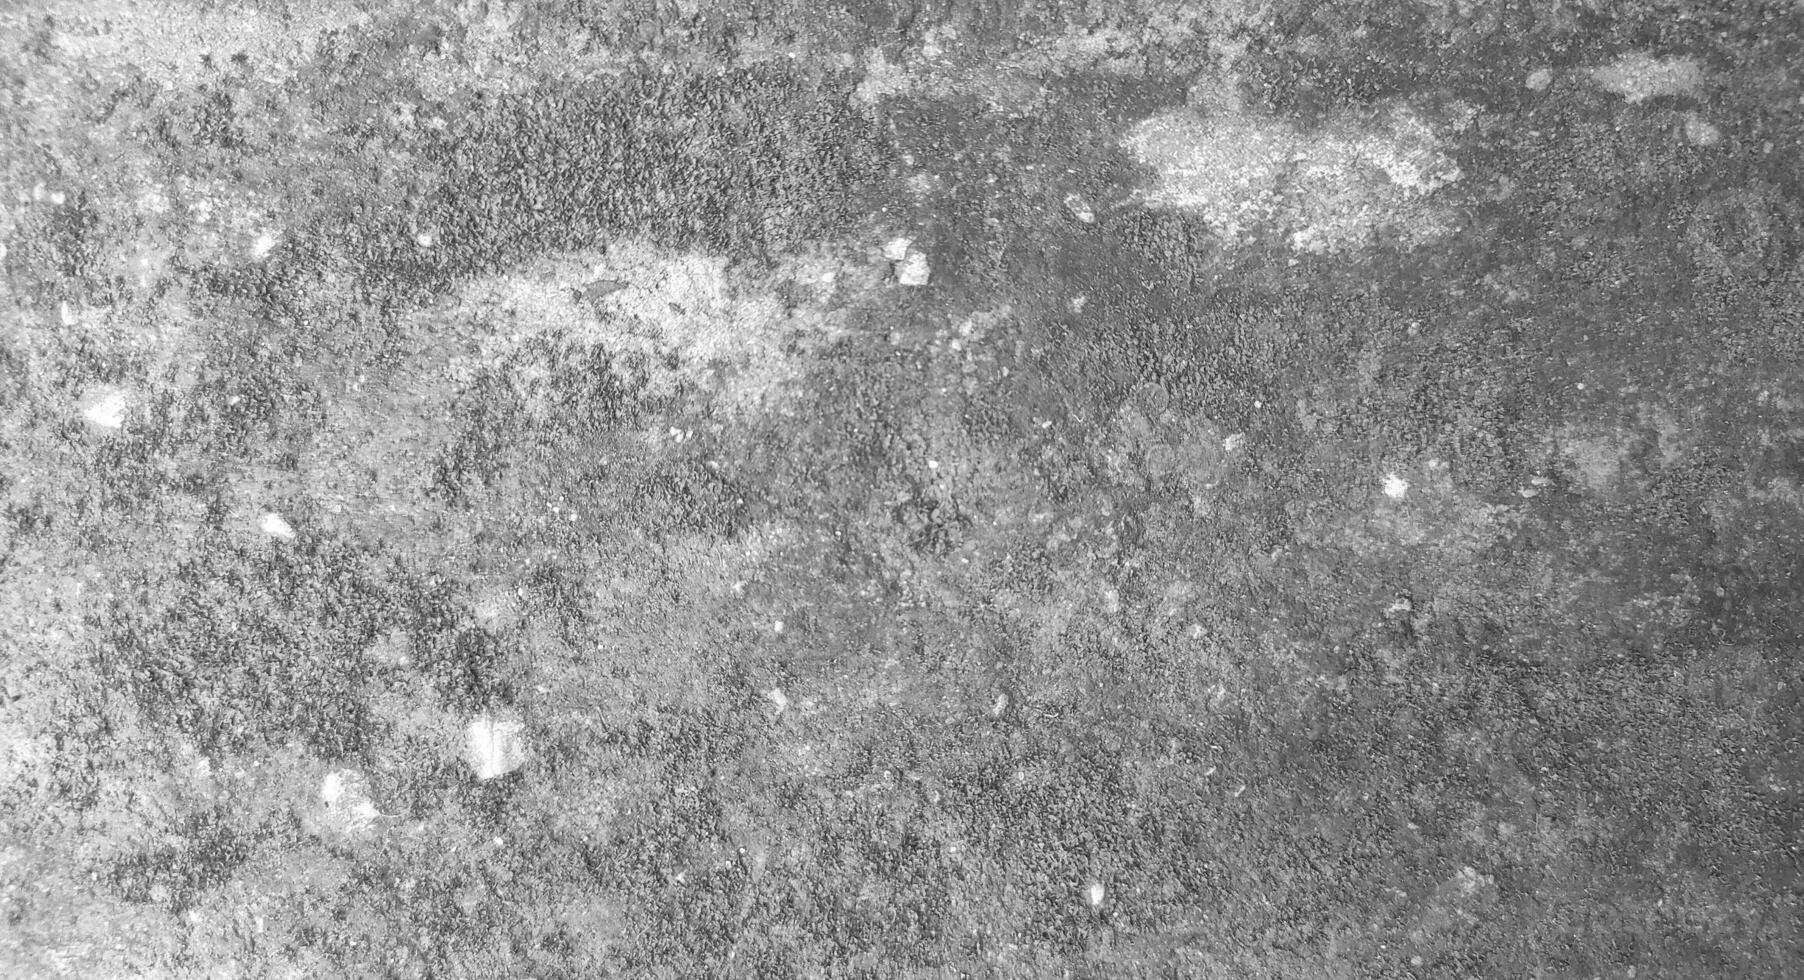 velho estragado concreto desbotado cor textura Preto e branco foto